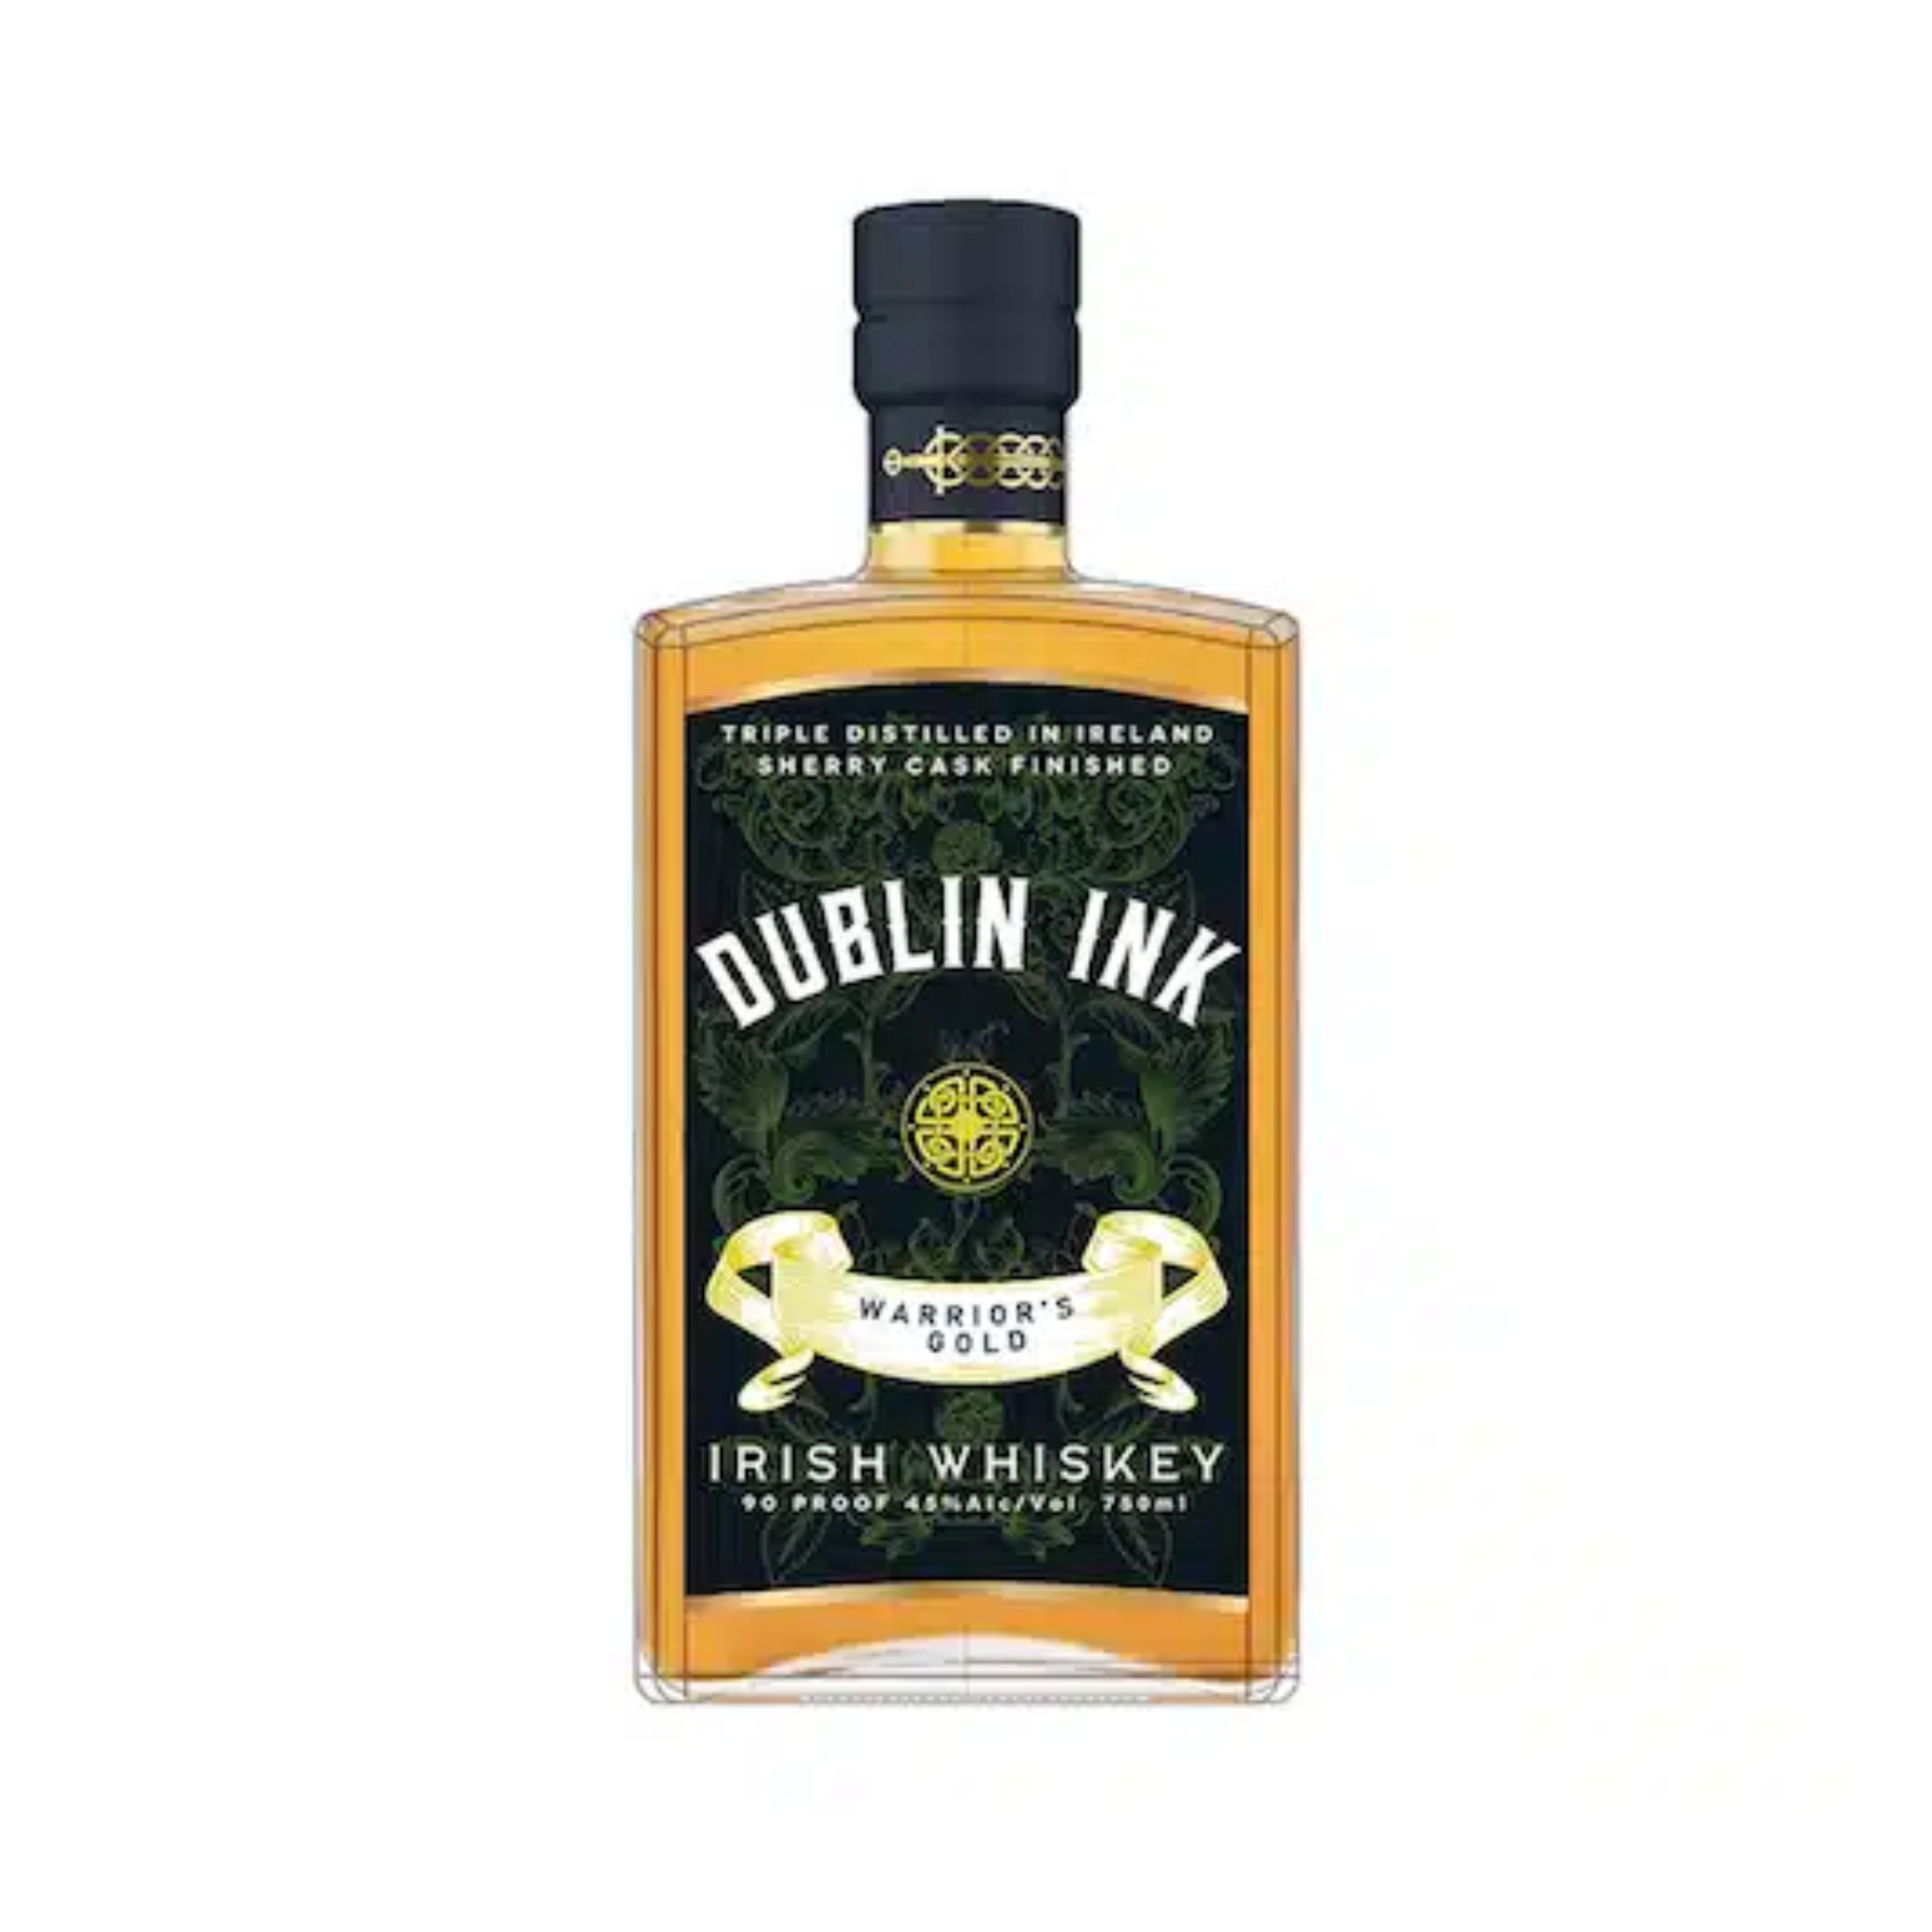 Dublin Ink Warrior's Gold Irish Whiskey